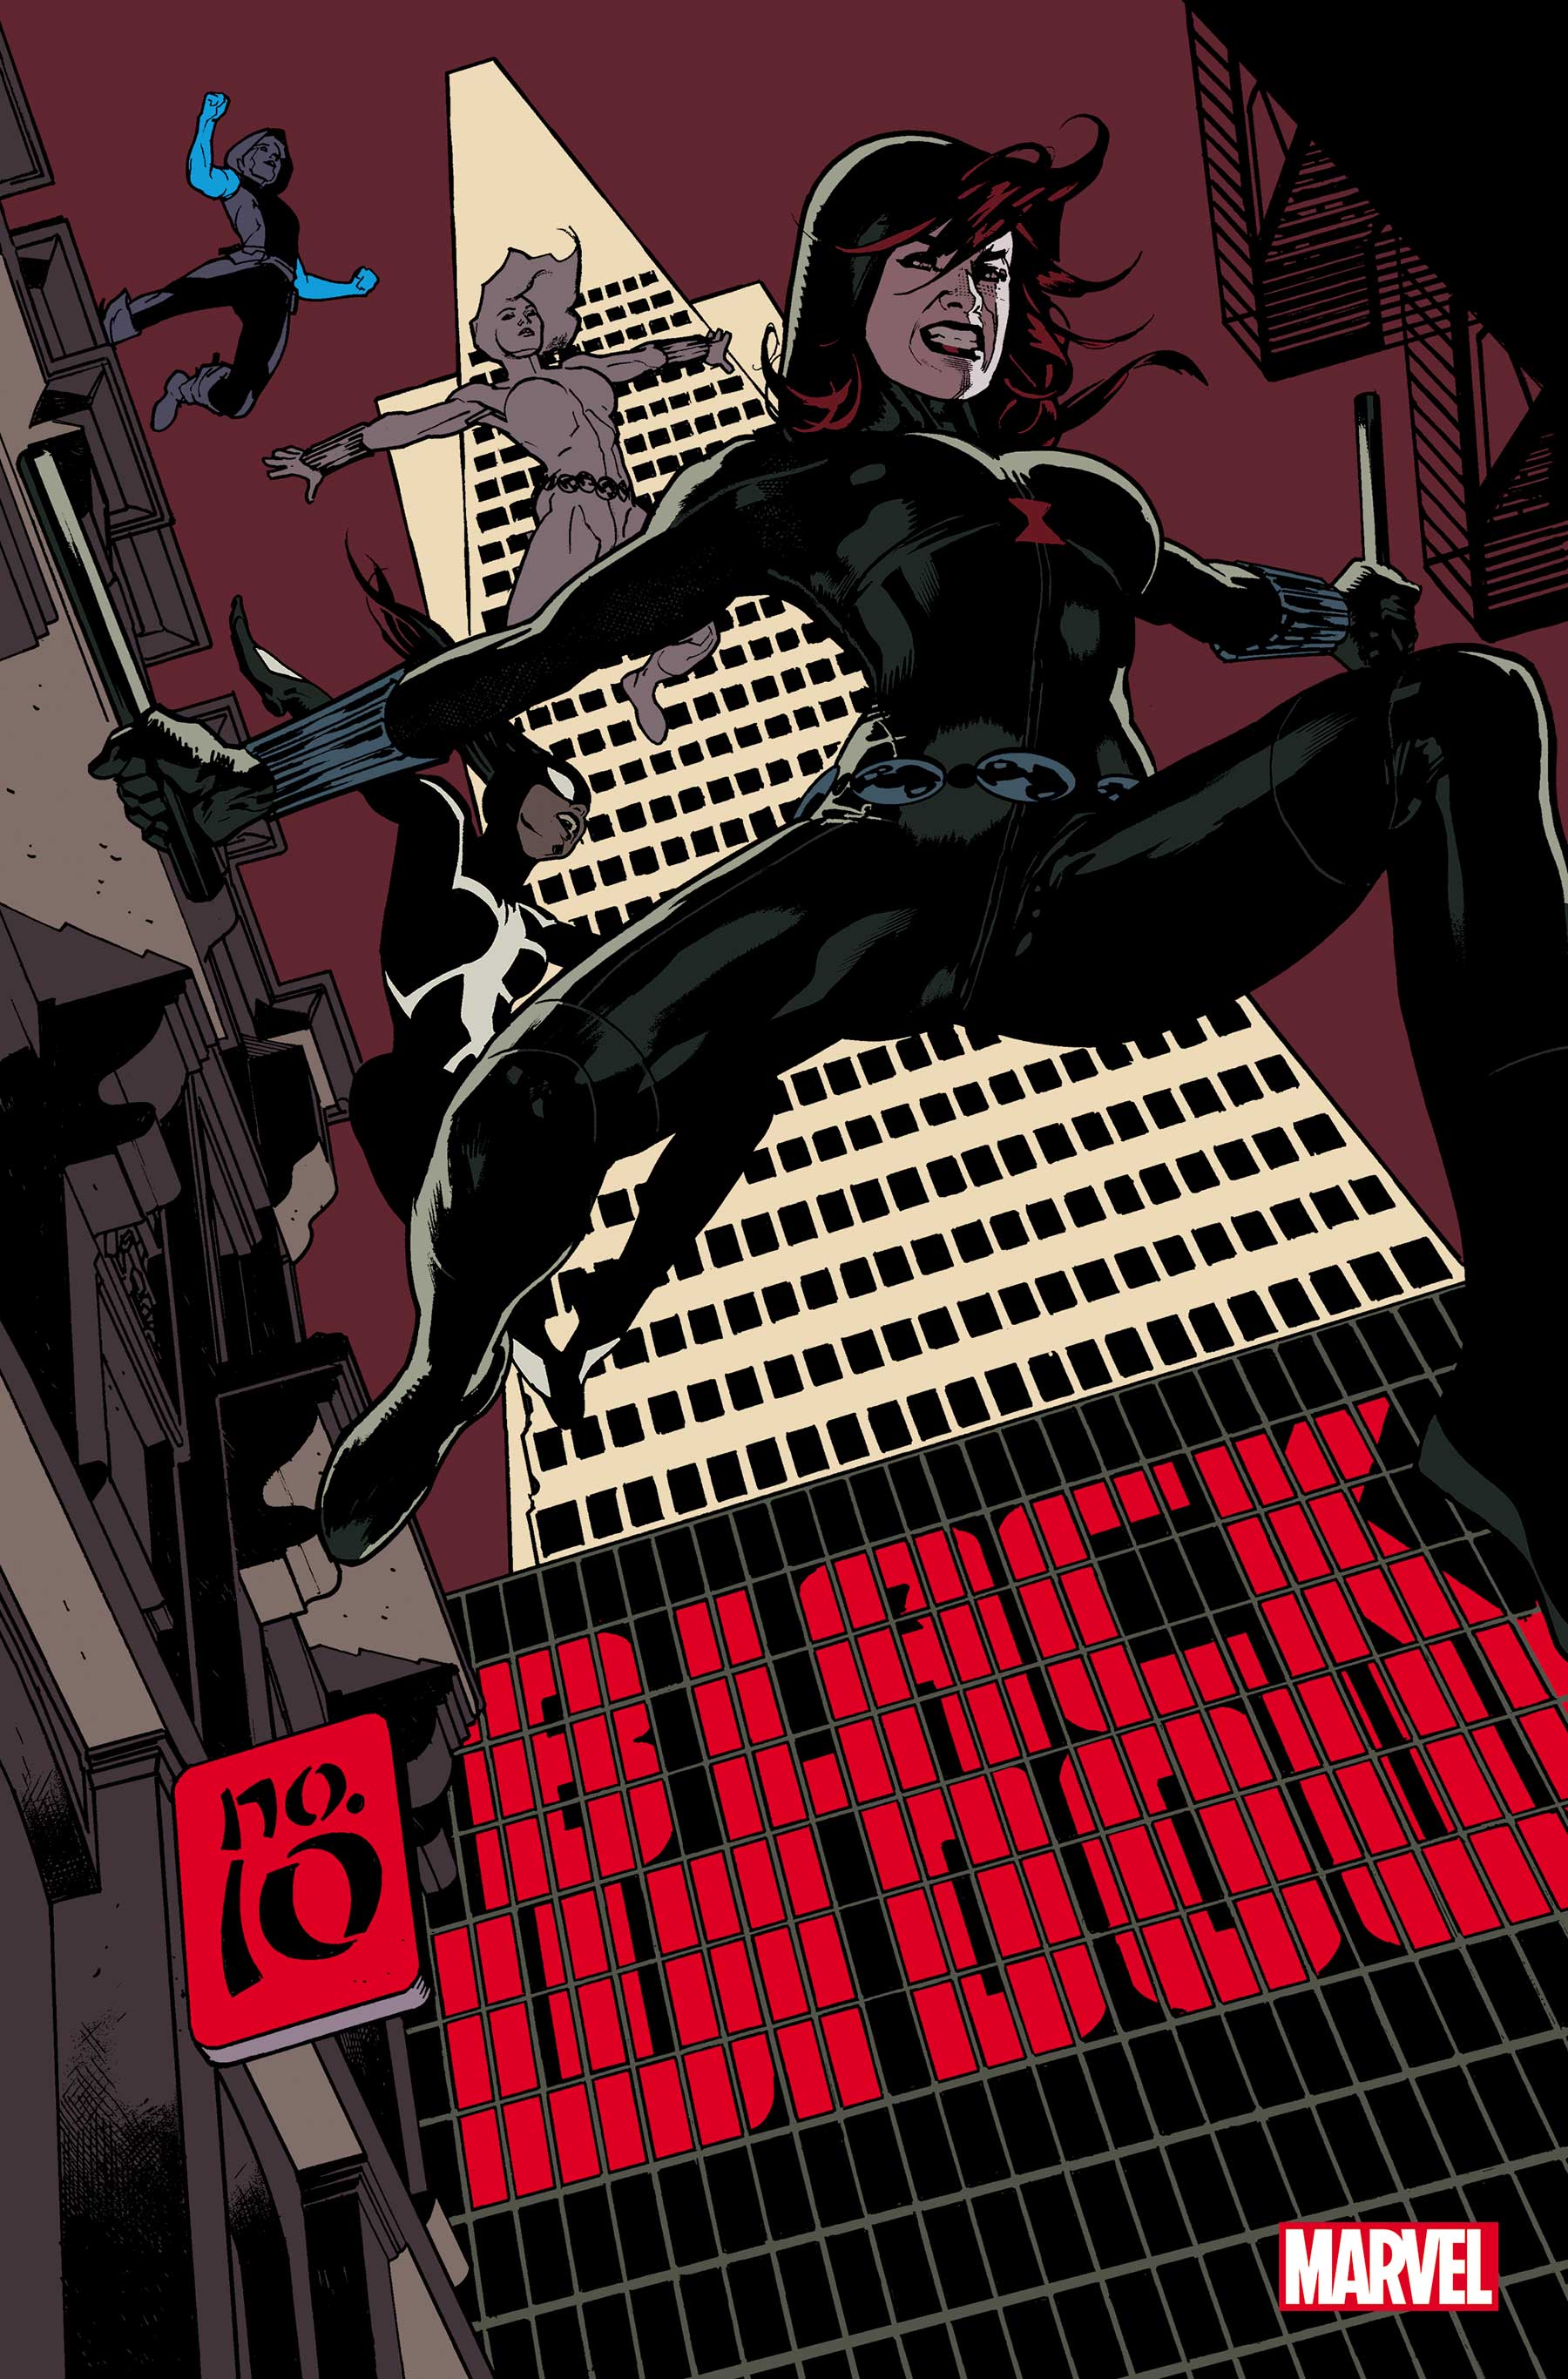 Black Widow (2020) #10